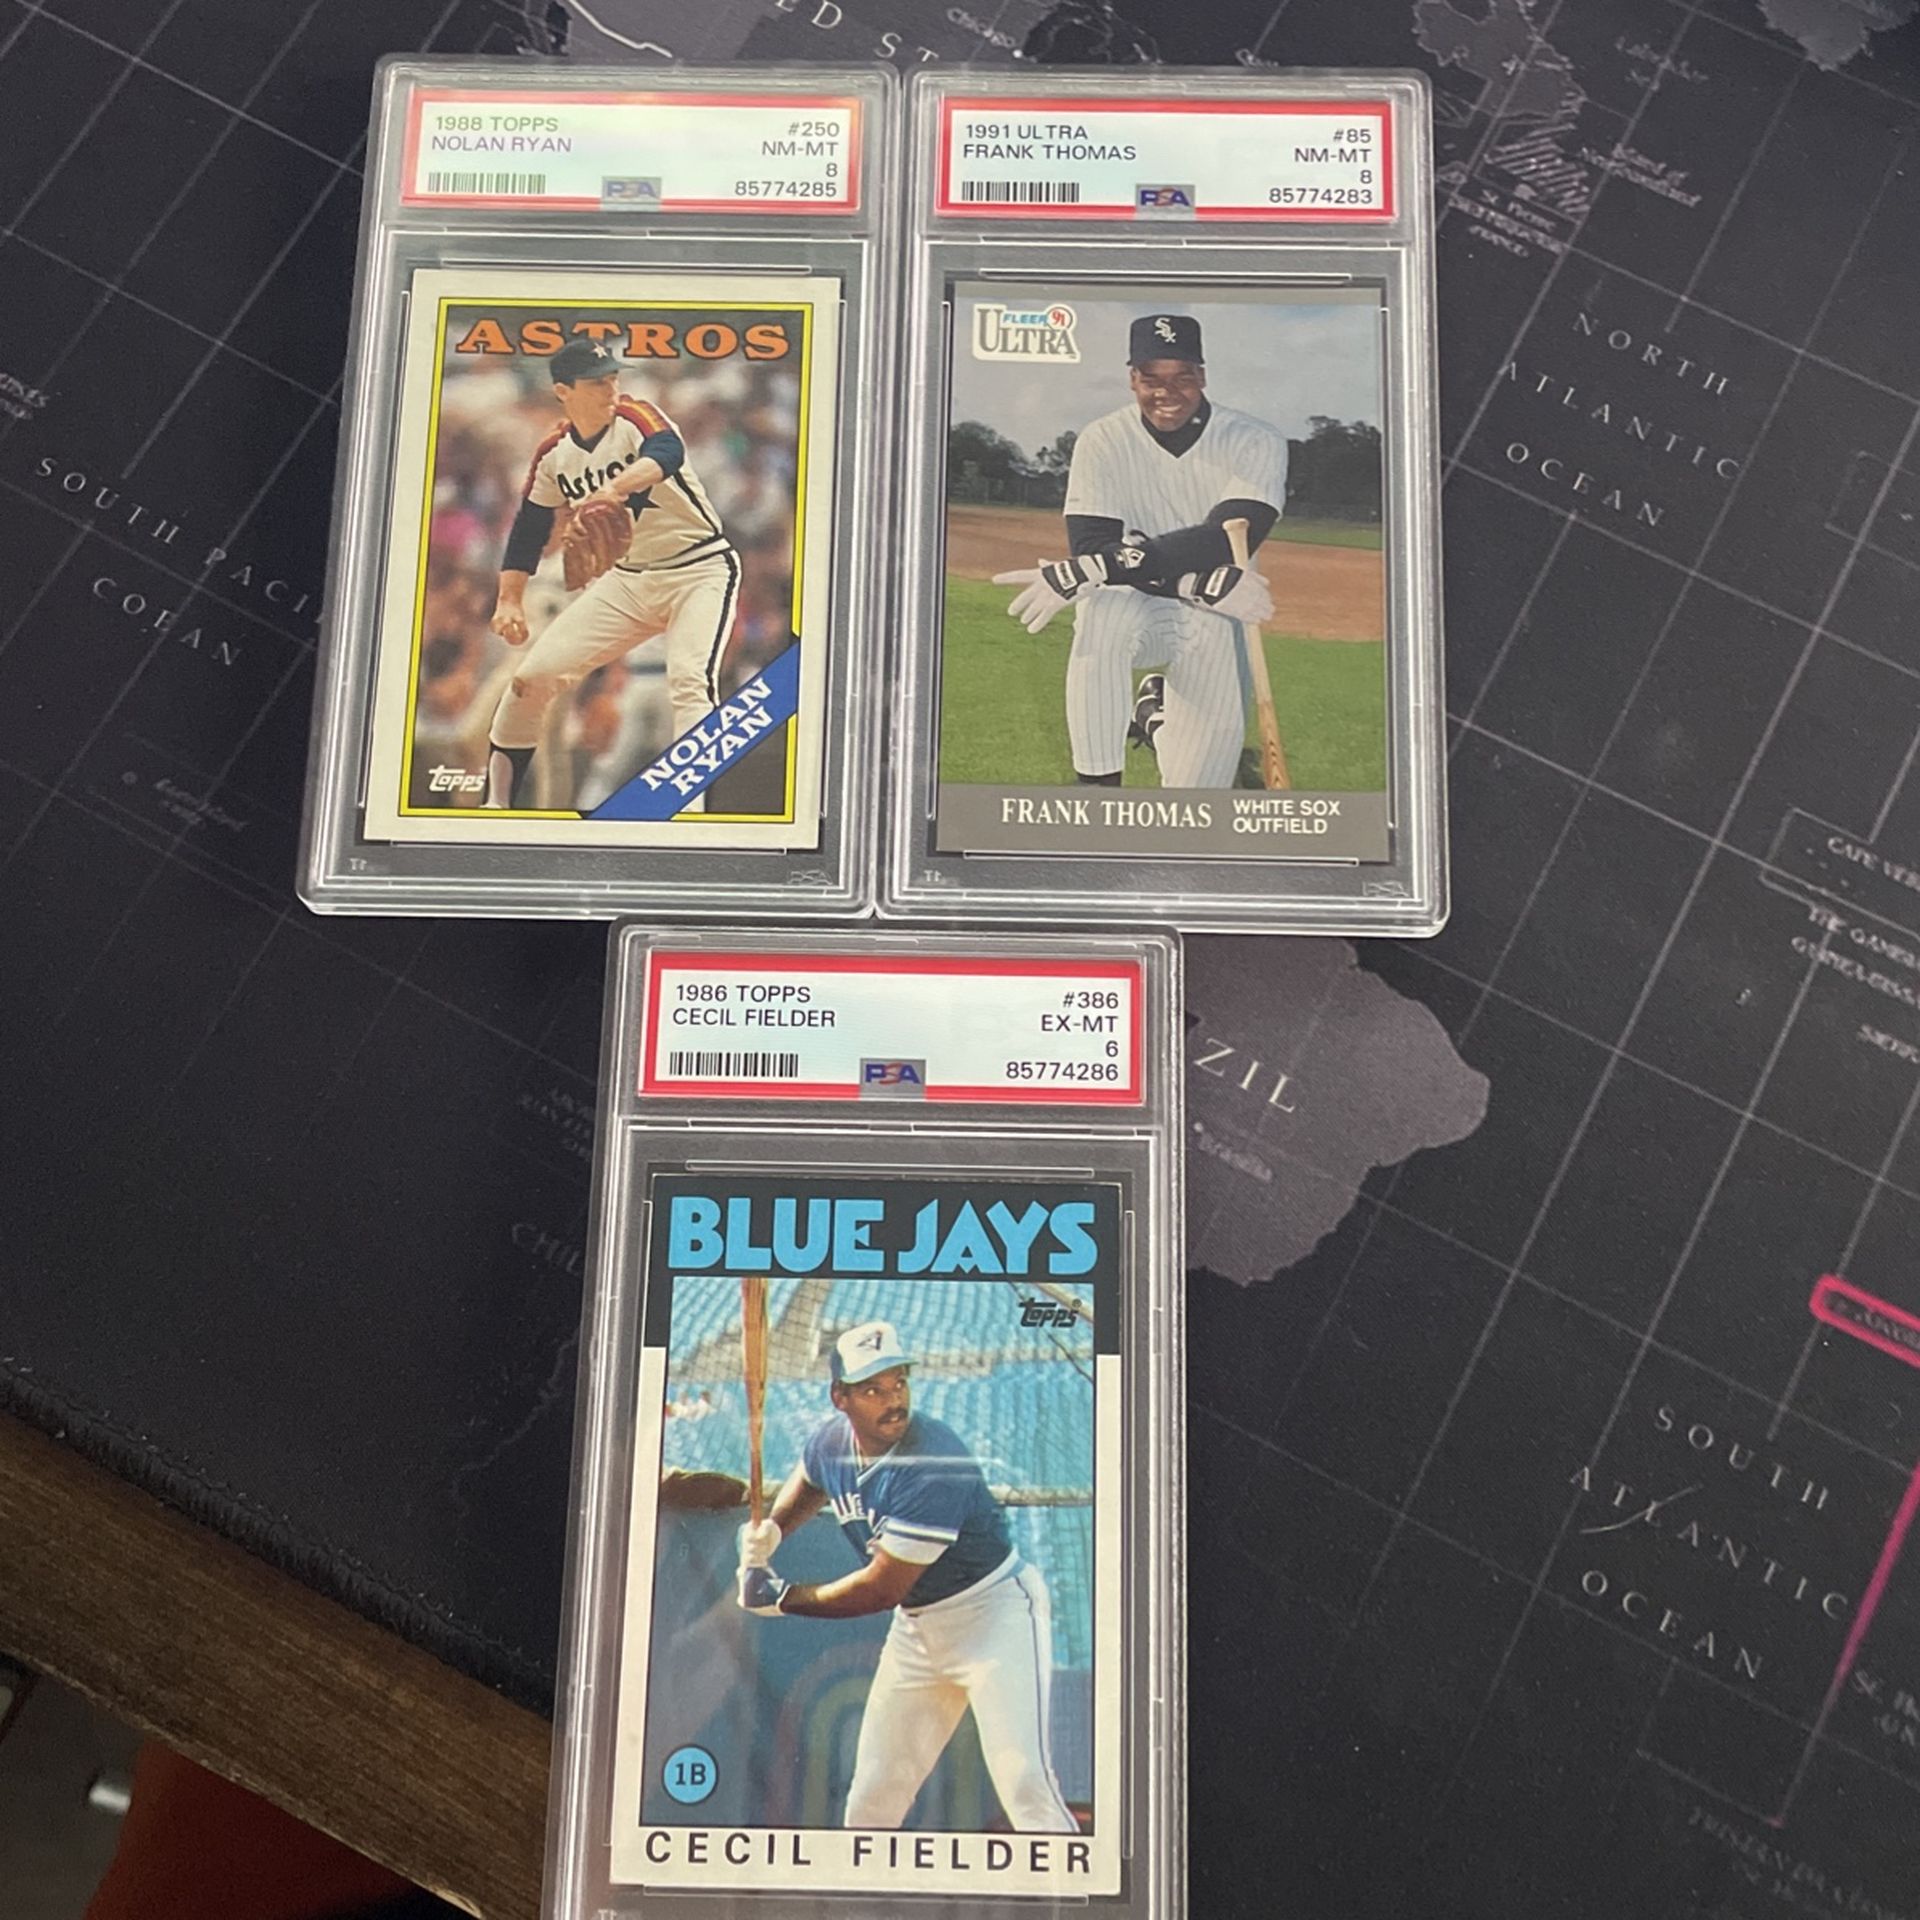 Graded baseball cards